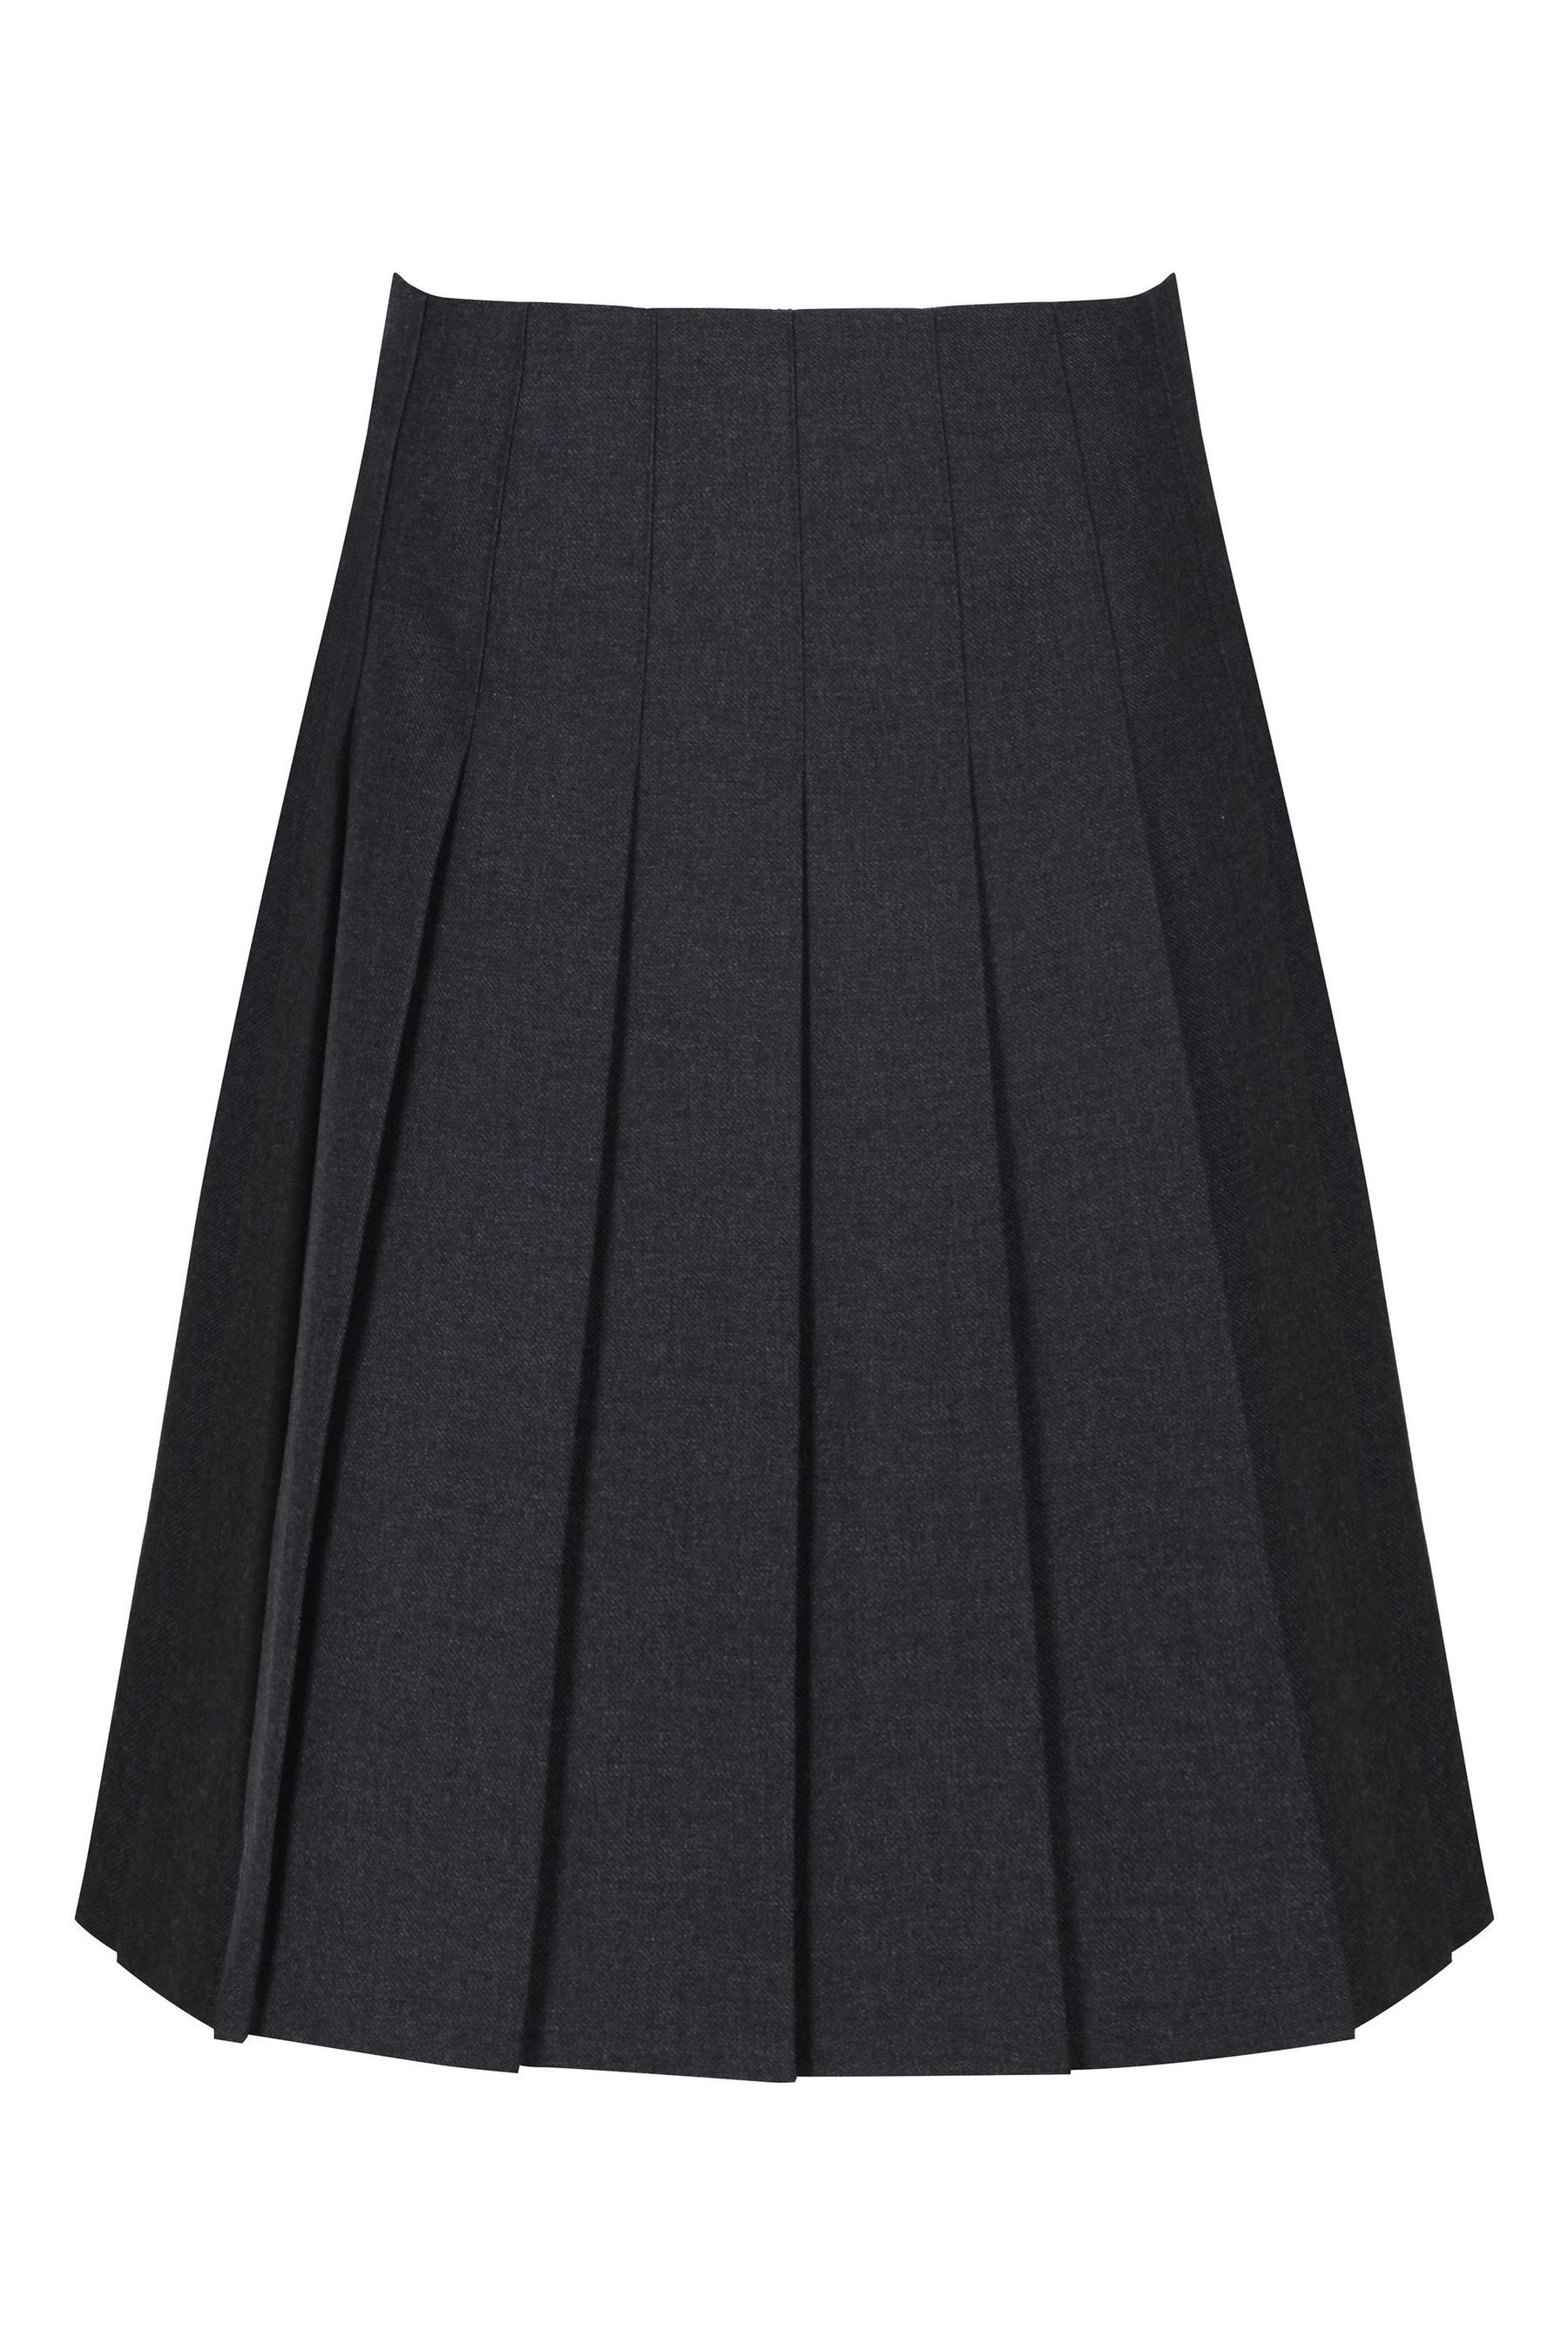 Buy Trutex Senior Girls Permanent Pleats School Skirt from the Next UK ...